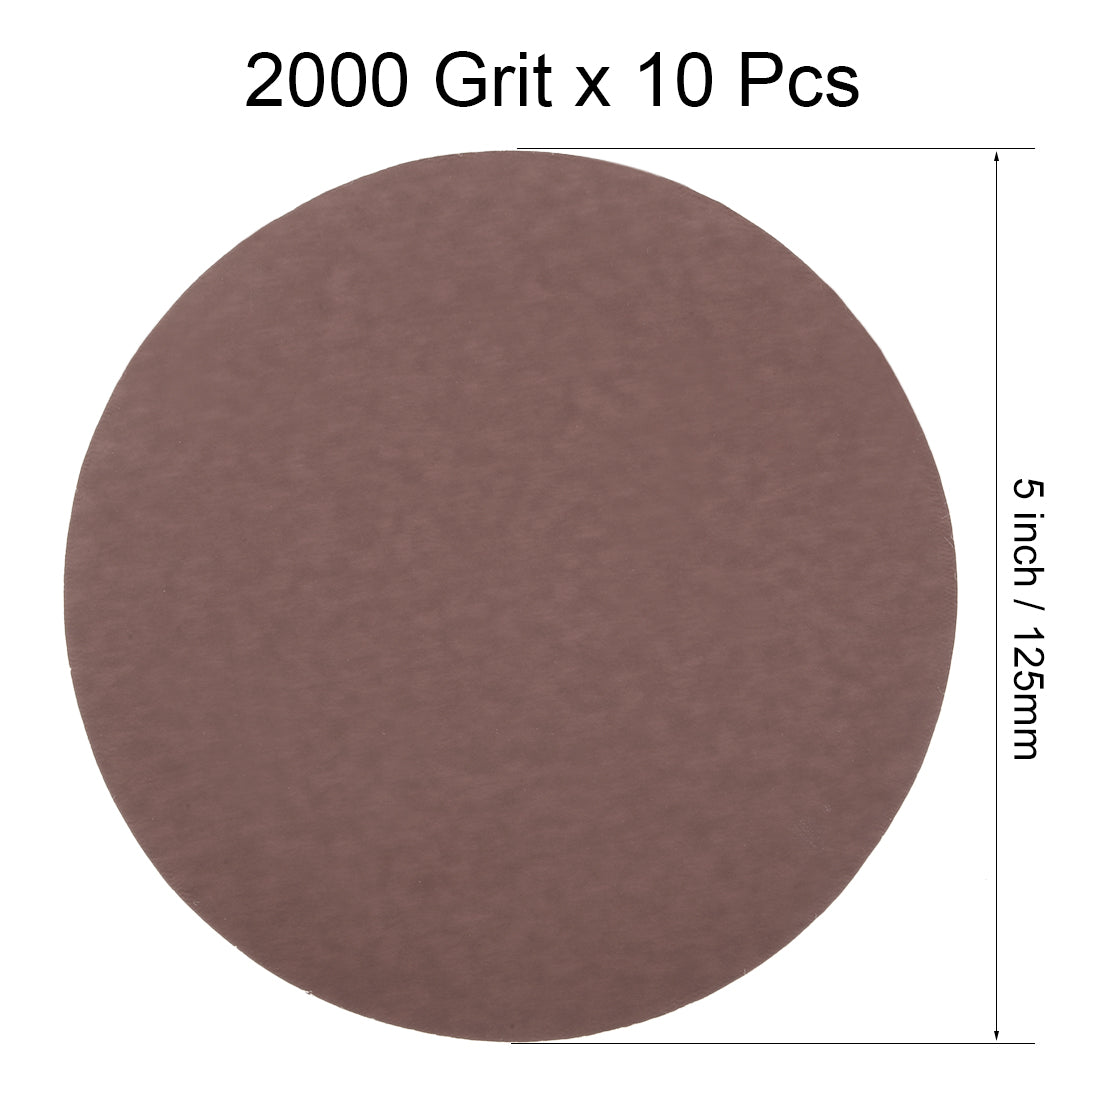 Uxcell Uxcell 5 Inch Sanding Disc 2000 Grits Flocking Sandpaper for Sander 10 Pcs